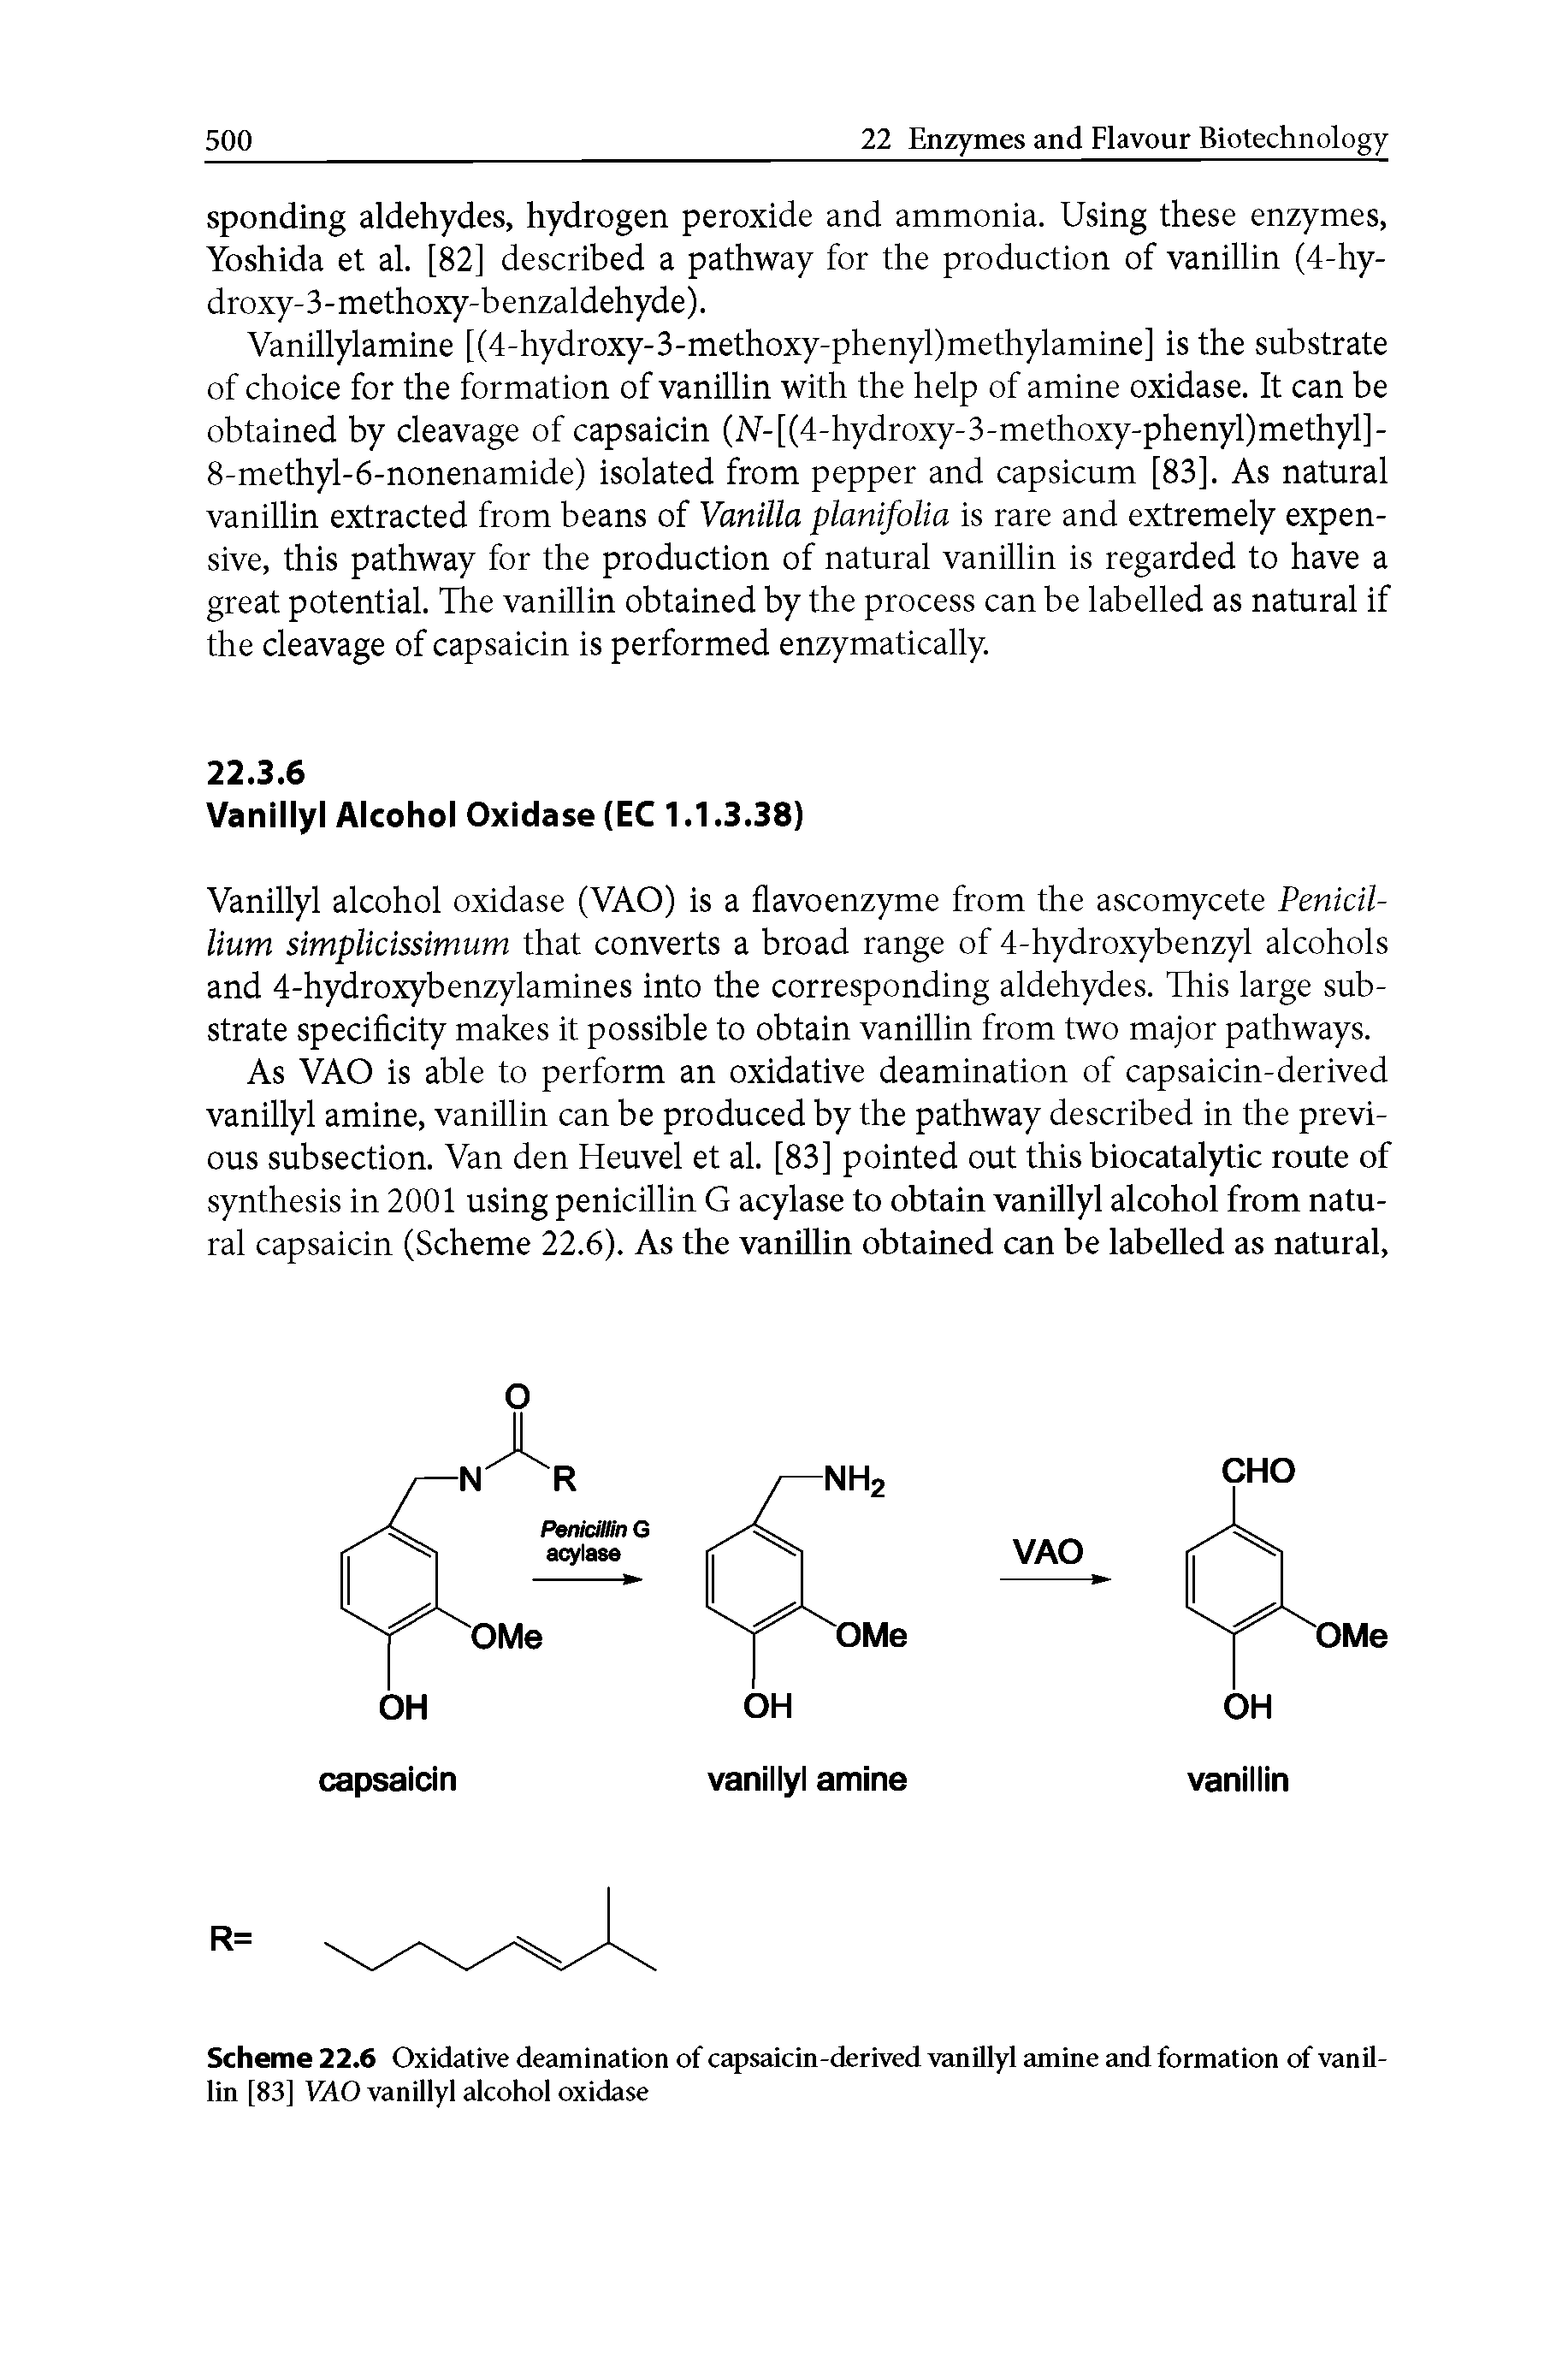 Scheme 22.6 Oxidative deamination of capsaicin-derived vanillyl amine and formation of vanillin [83] VAO vanillyl alcohol oxidase...